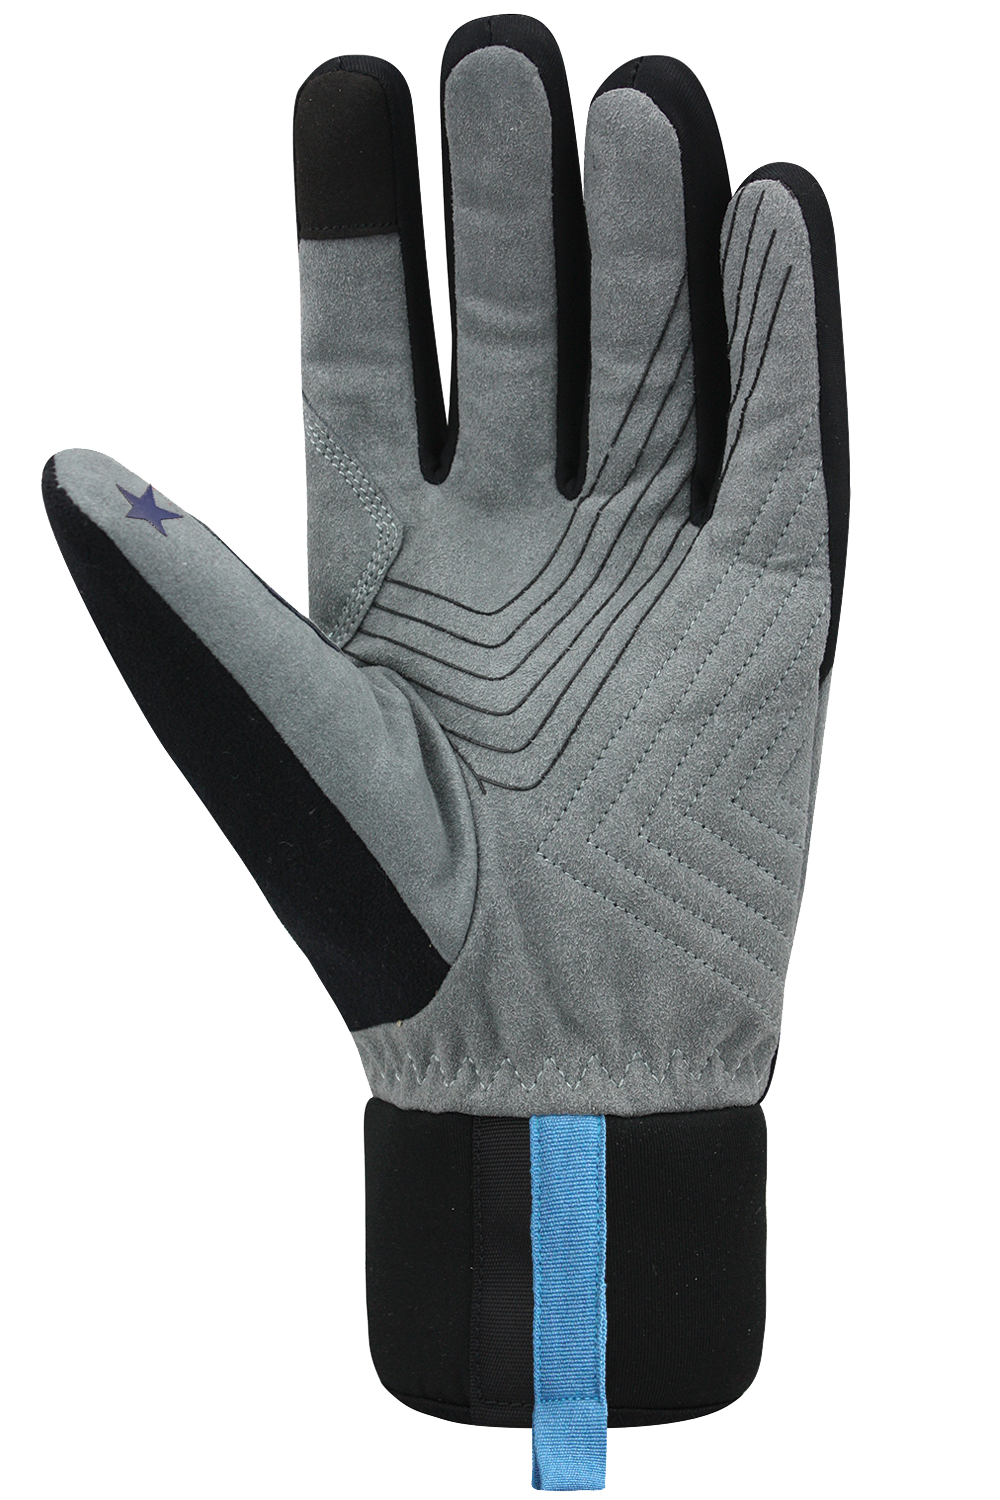 Stellar USA Gloves - Adult, Black/Grey